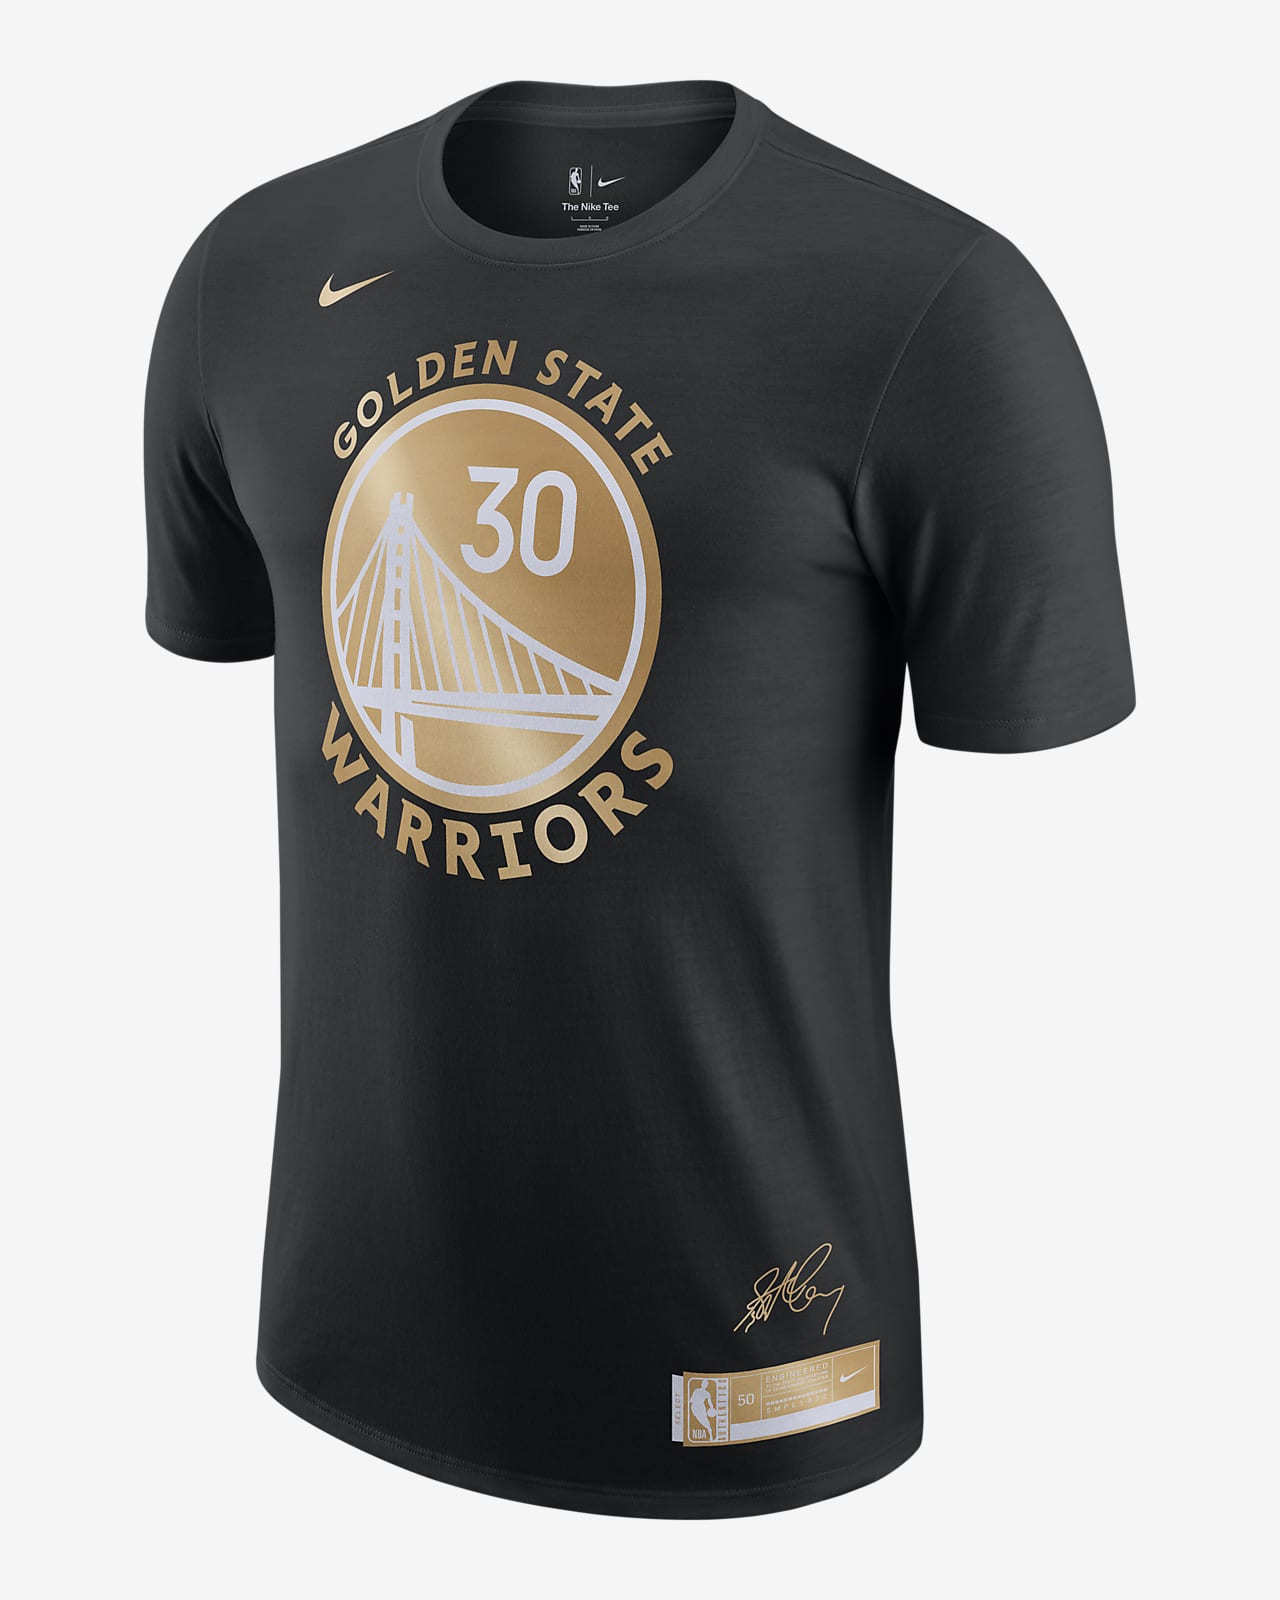 Stephen Curry Select Series Men's Nike NBA T-Shirt